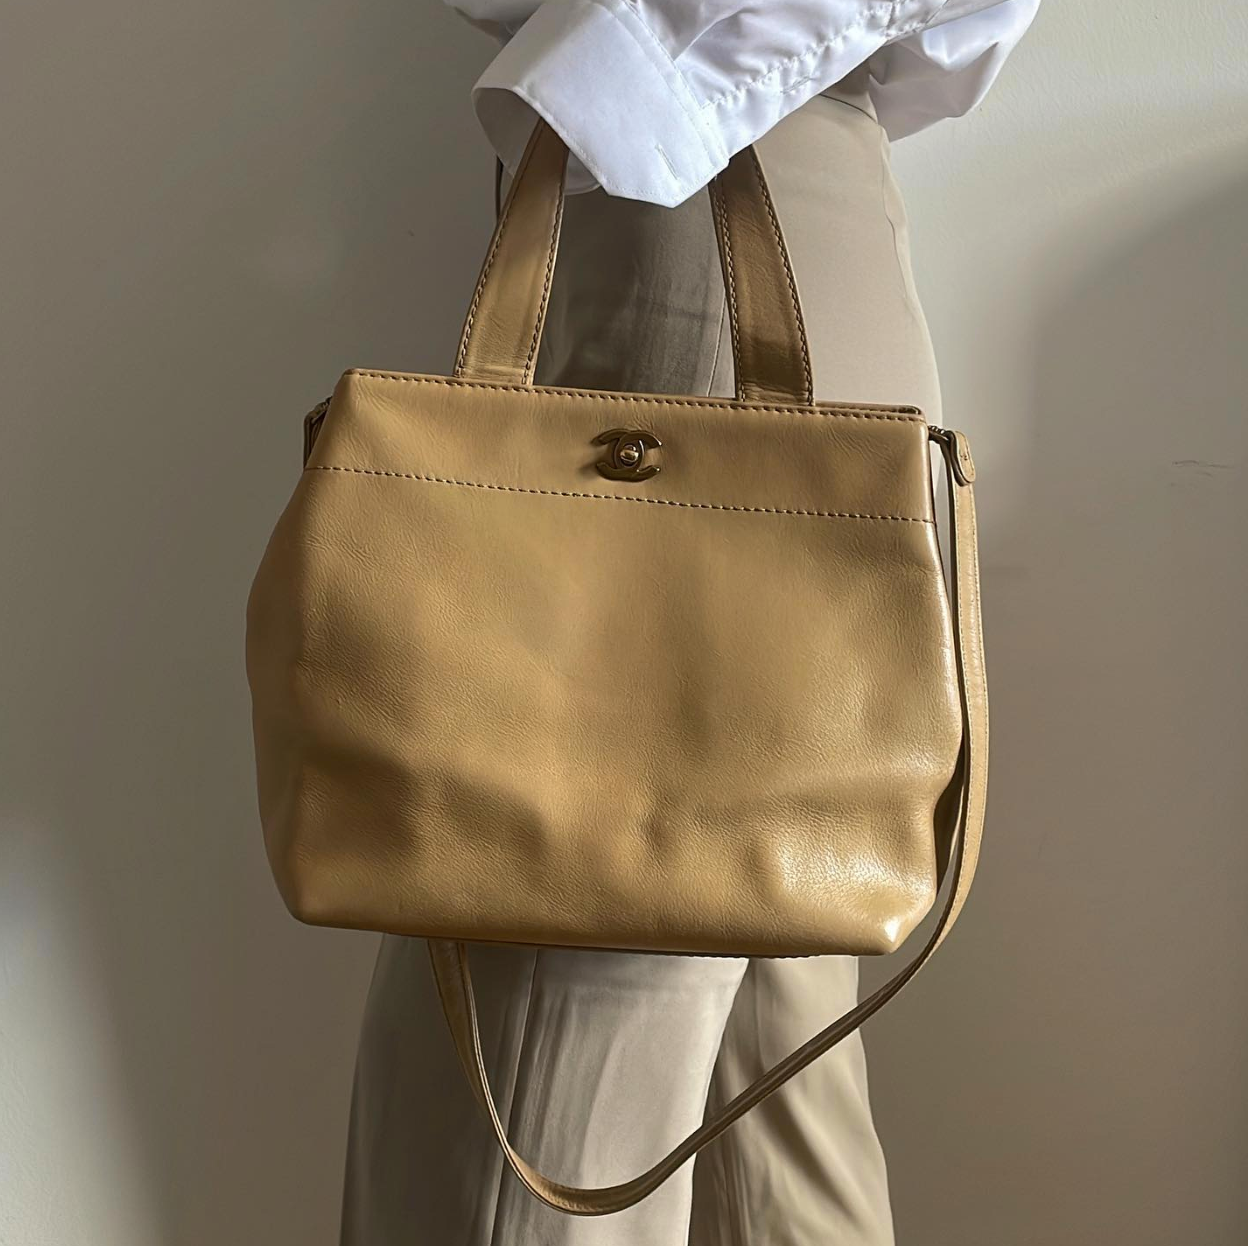 Chanel Beige Leather Handbag